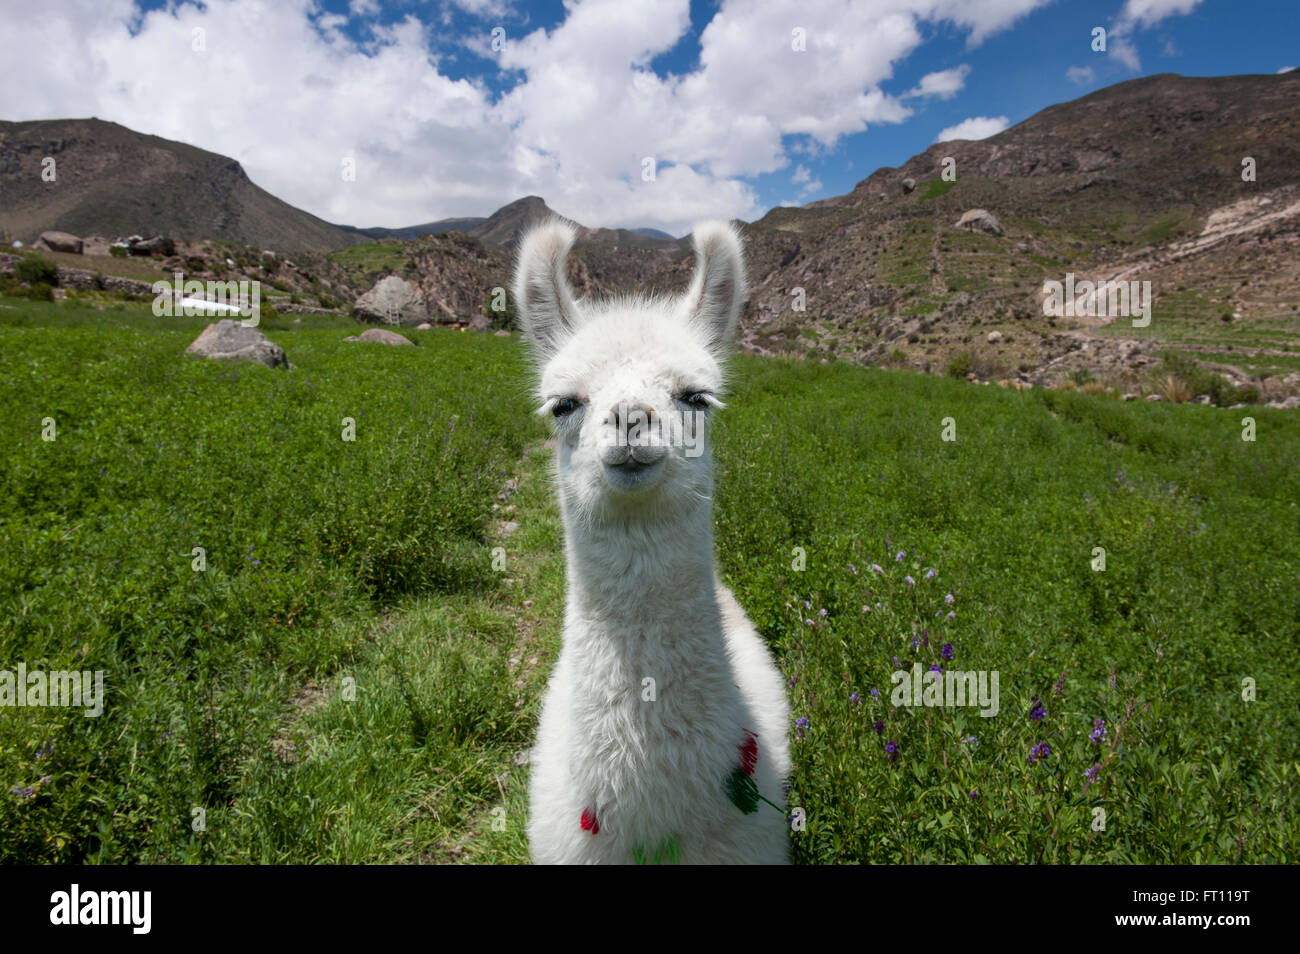 Young alpaca, Arica, Arica y Parinacota, Chile Stock Photo